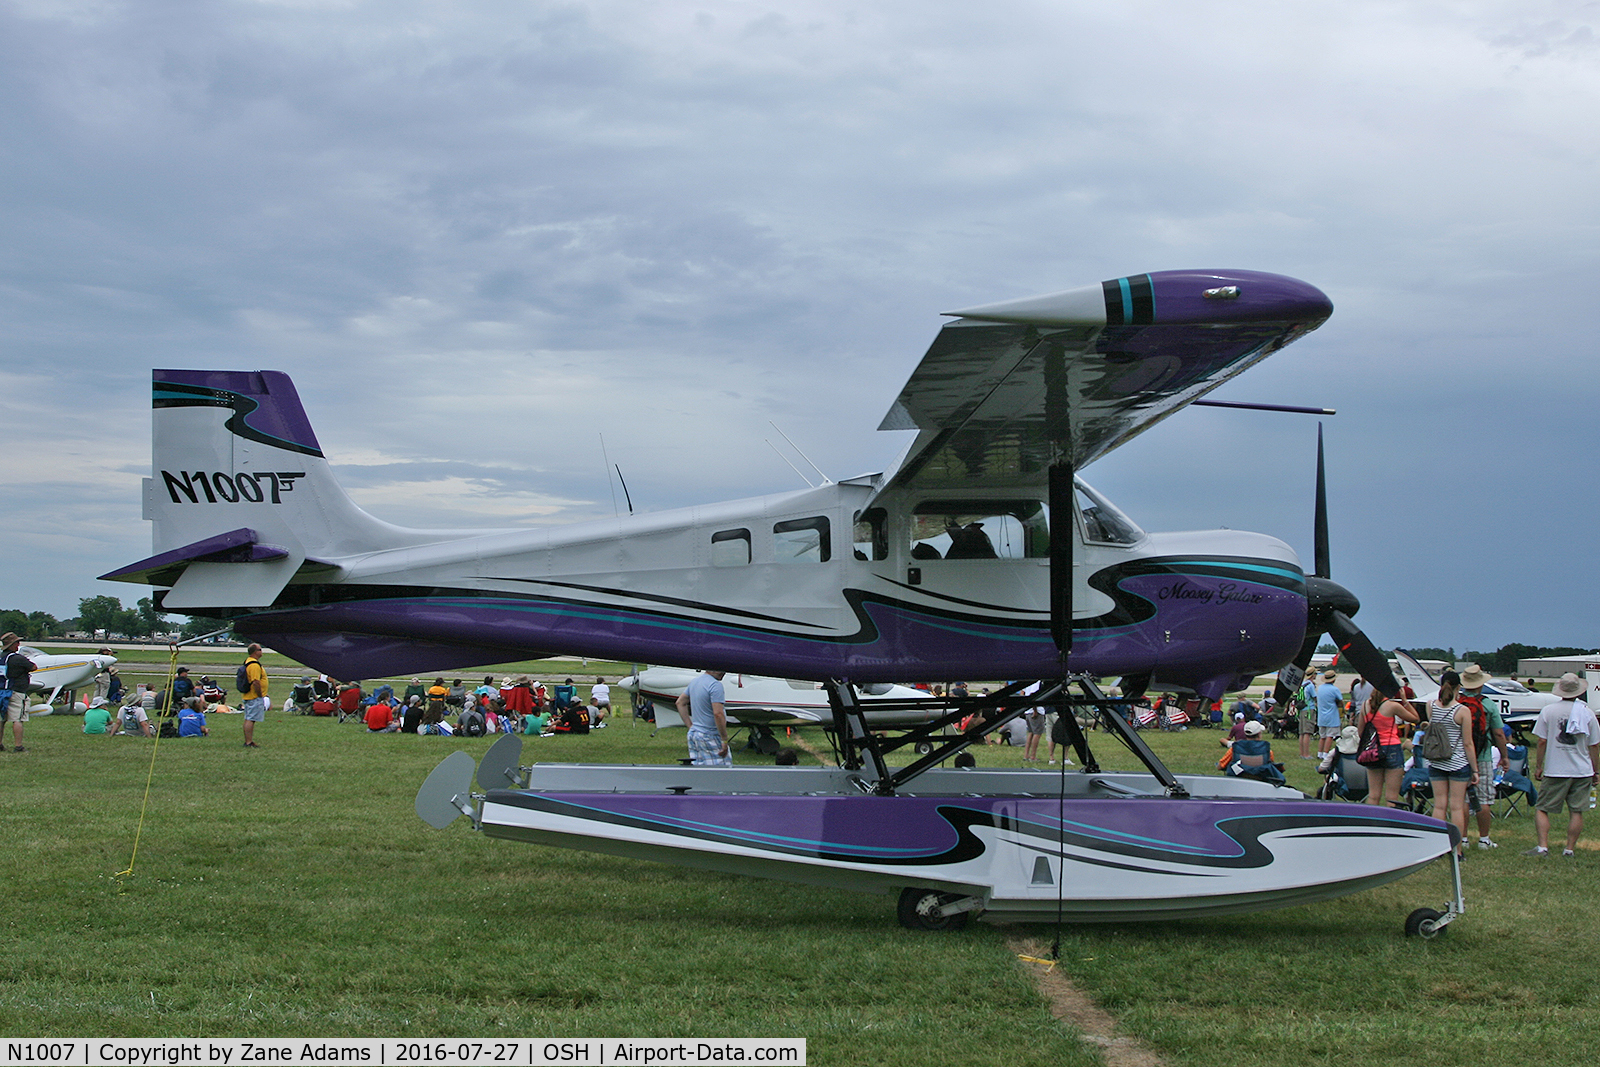 N1007, 2005 Murphy SR3500 Moose C/N 130, At the 2016 EAA AirVenture - Oshkosh, Wisconsin